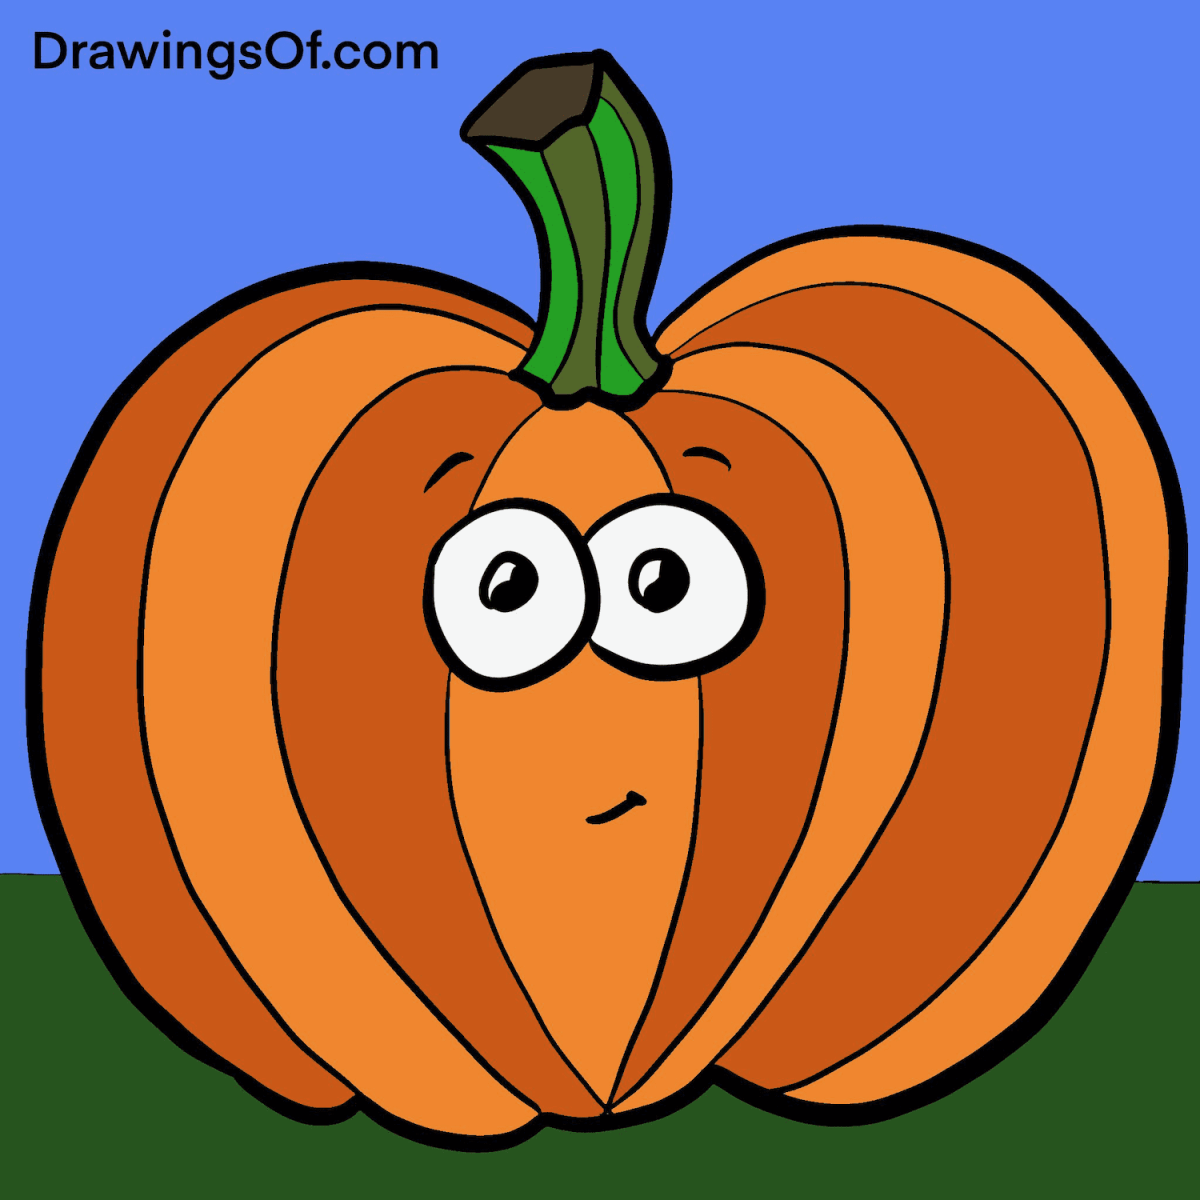 Pumpkin drawing easy and cute cartoons